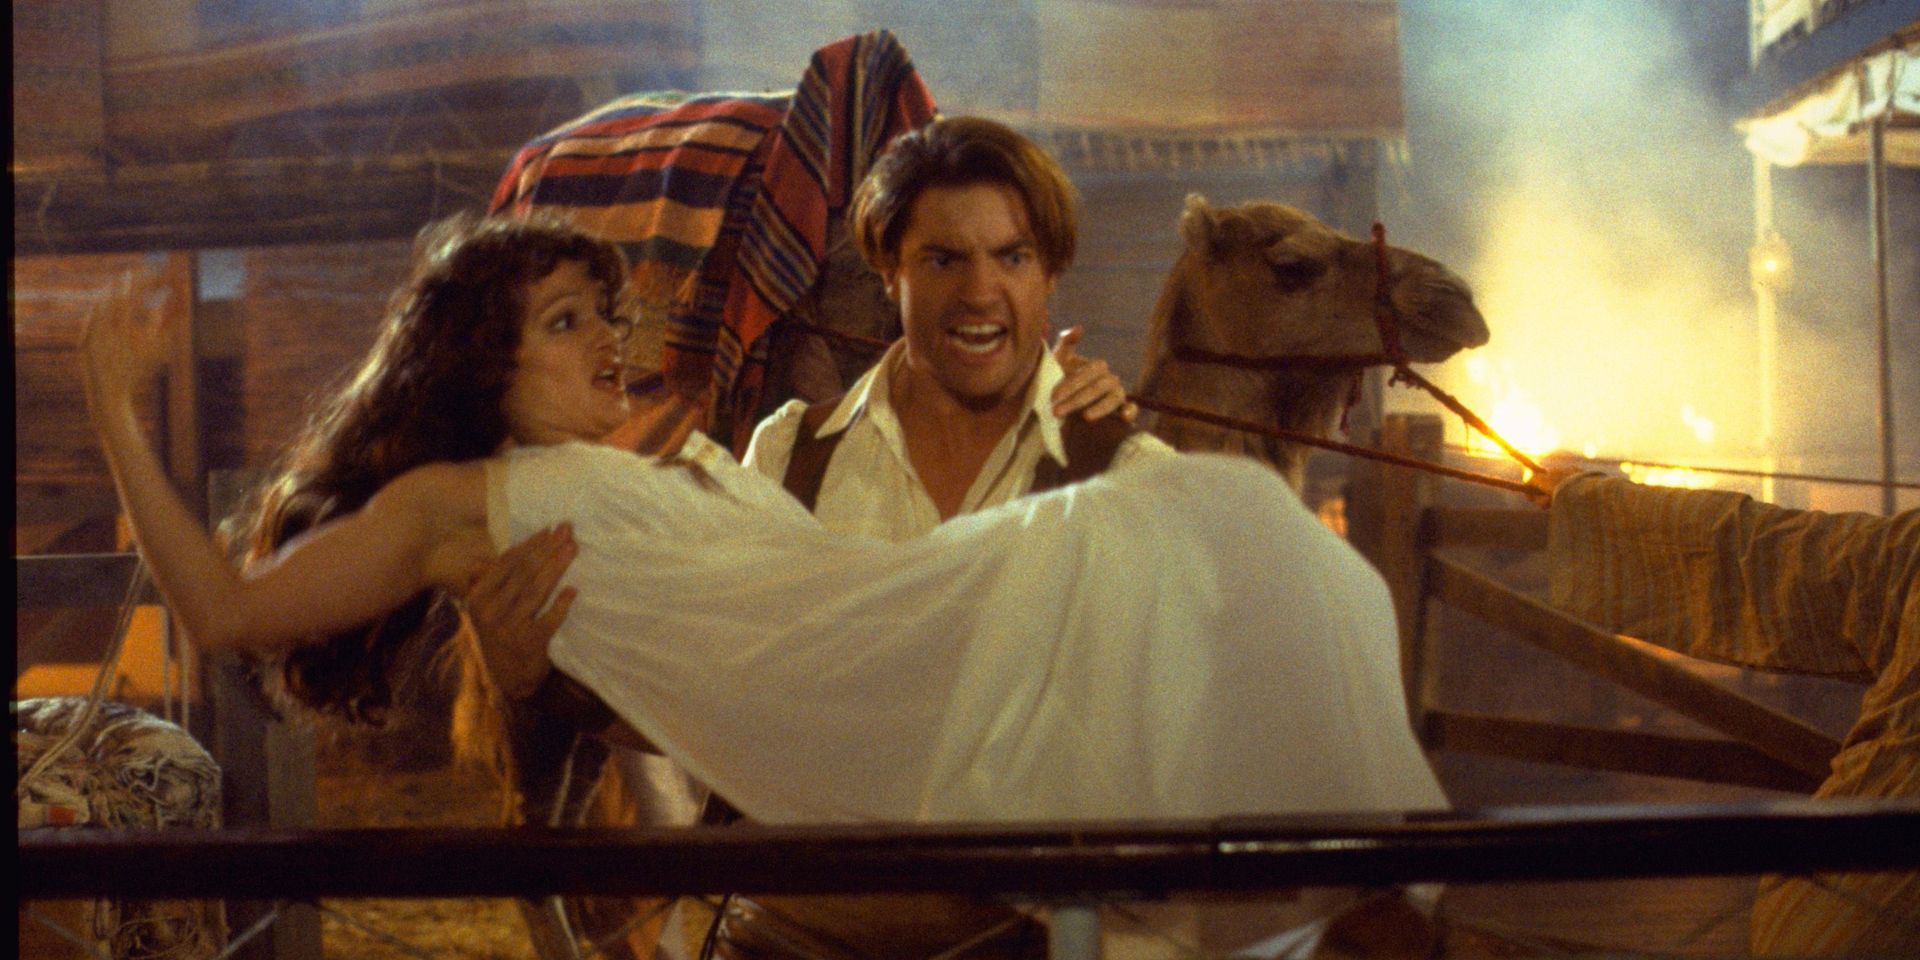 Brendan Fraser and Rachel Weisz in the boat scene in The Mummy